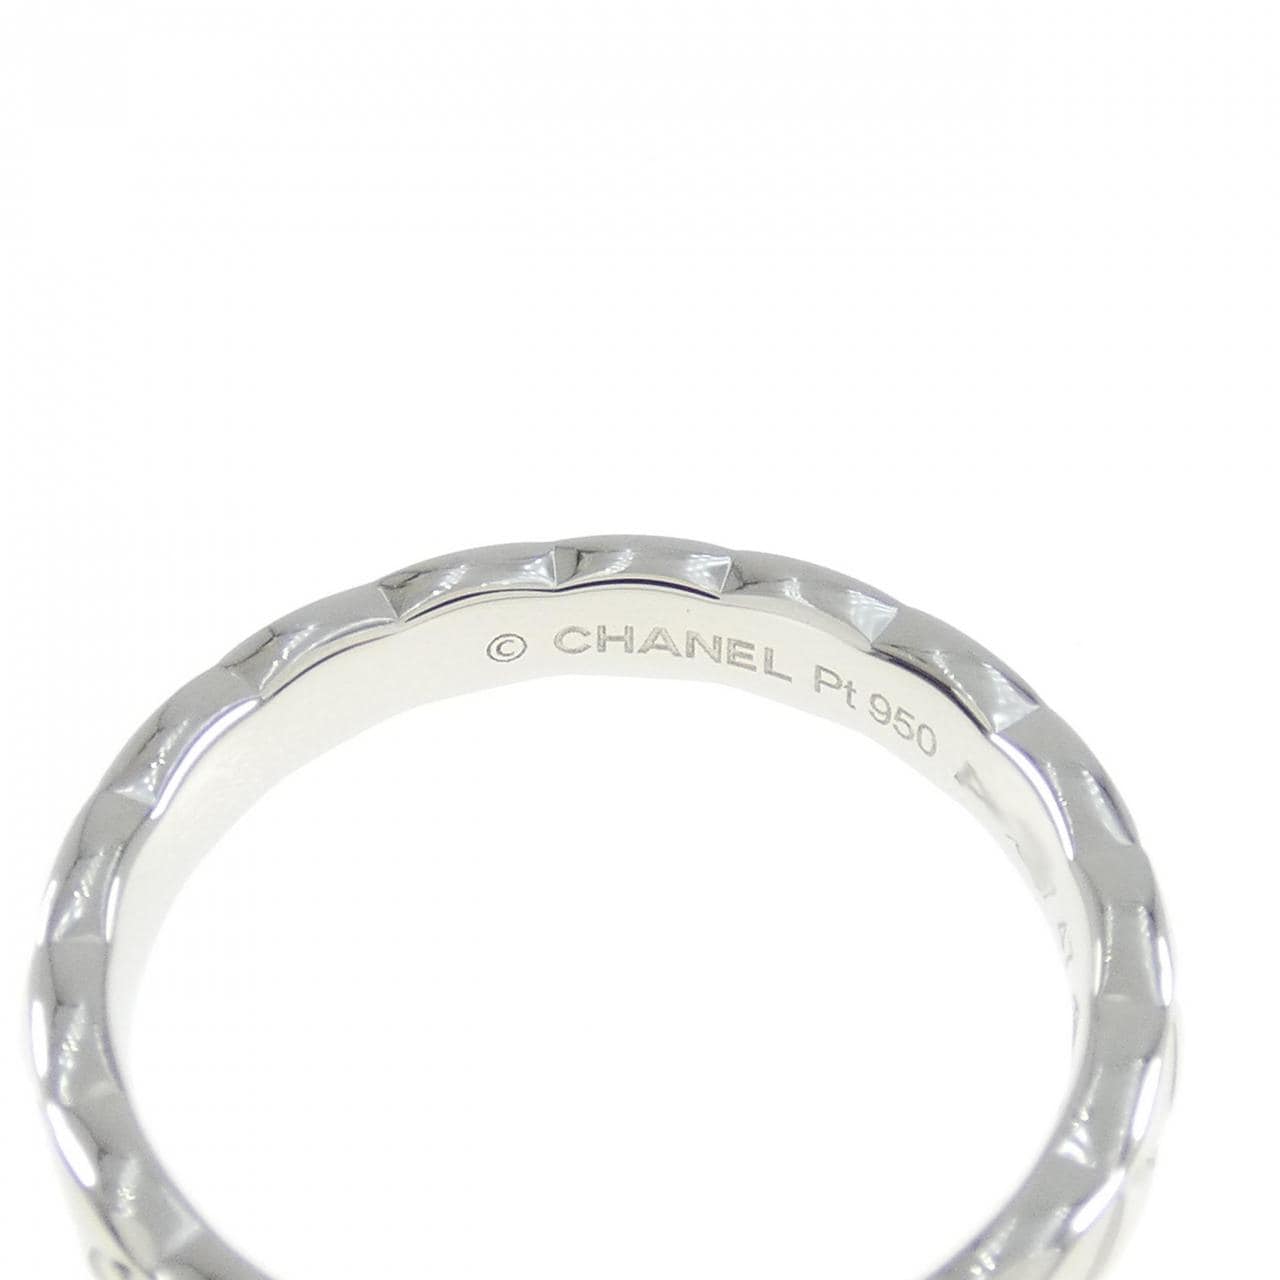 CHANEL Coco Crush Small 5P Ring